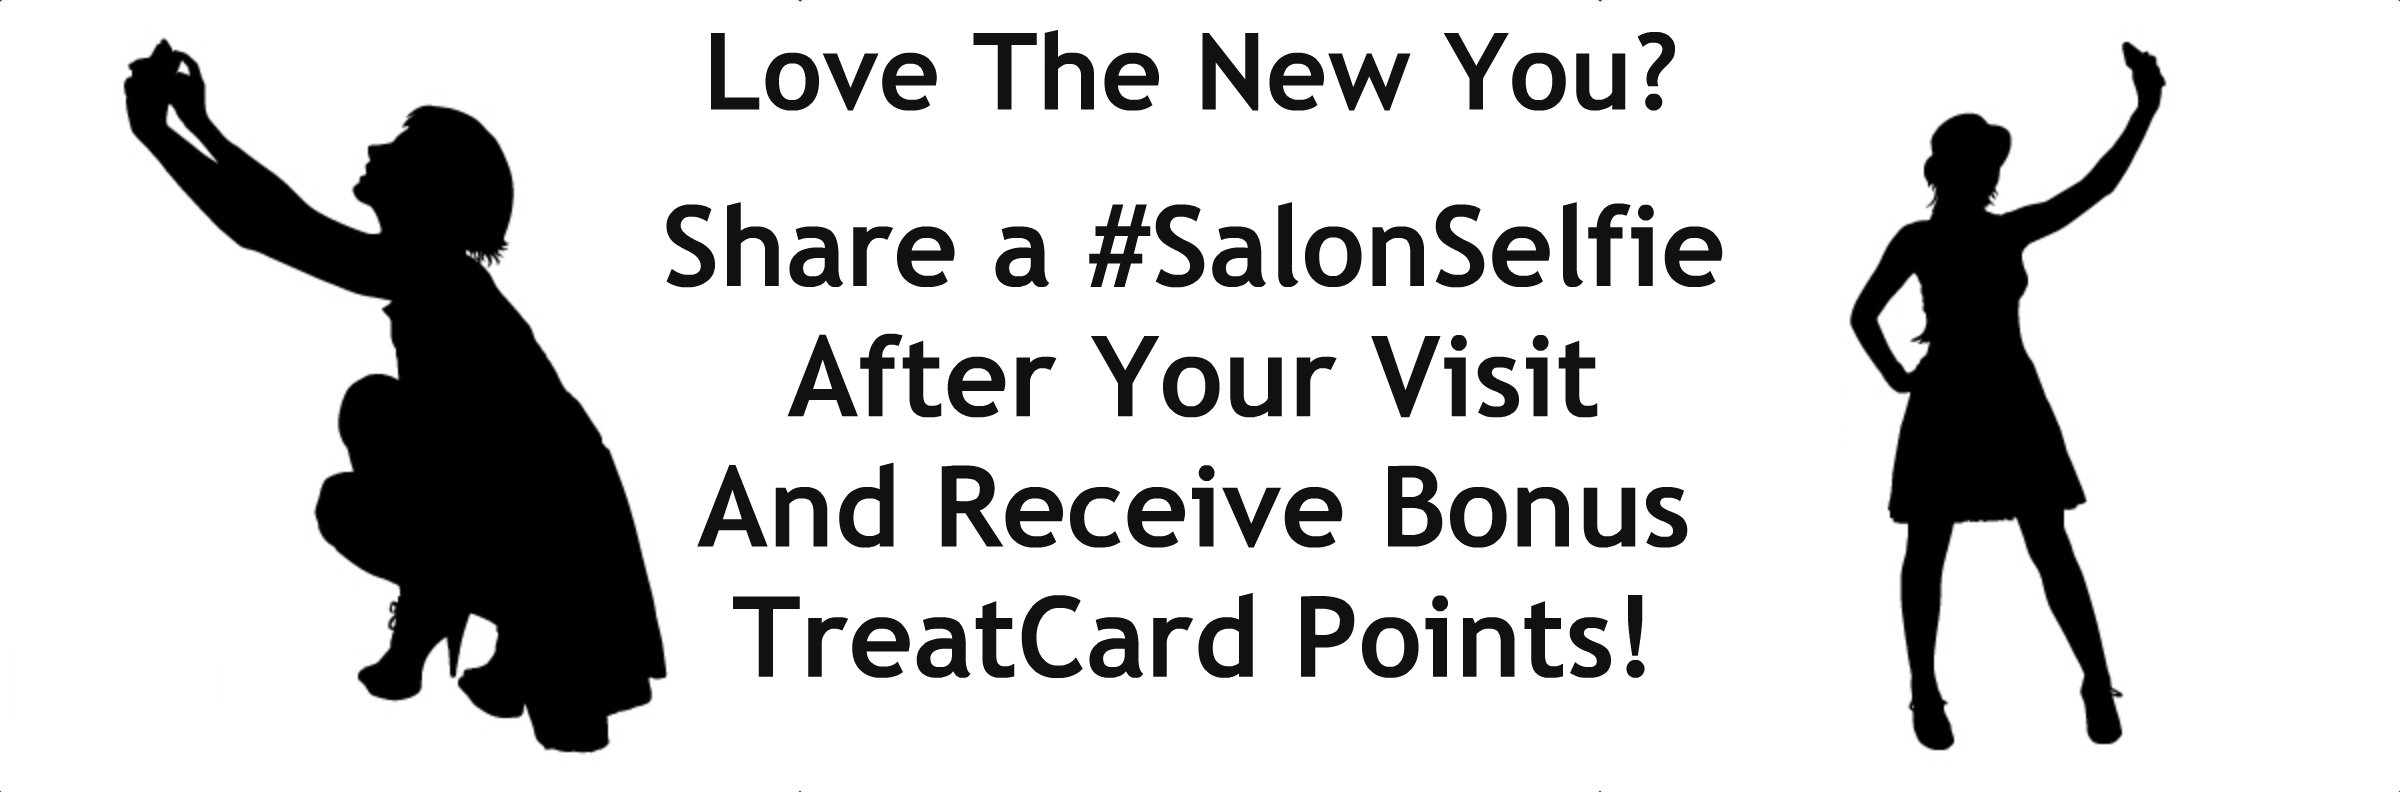 salon-selfie-marketing-ideas